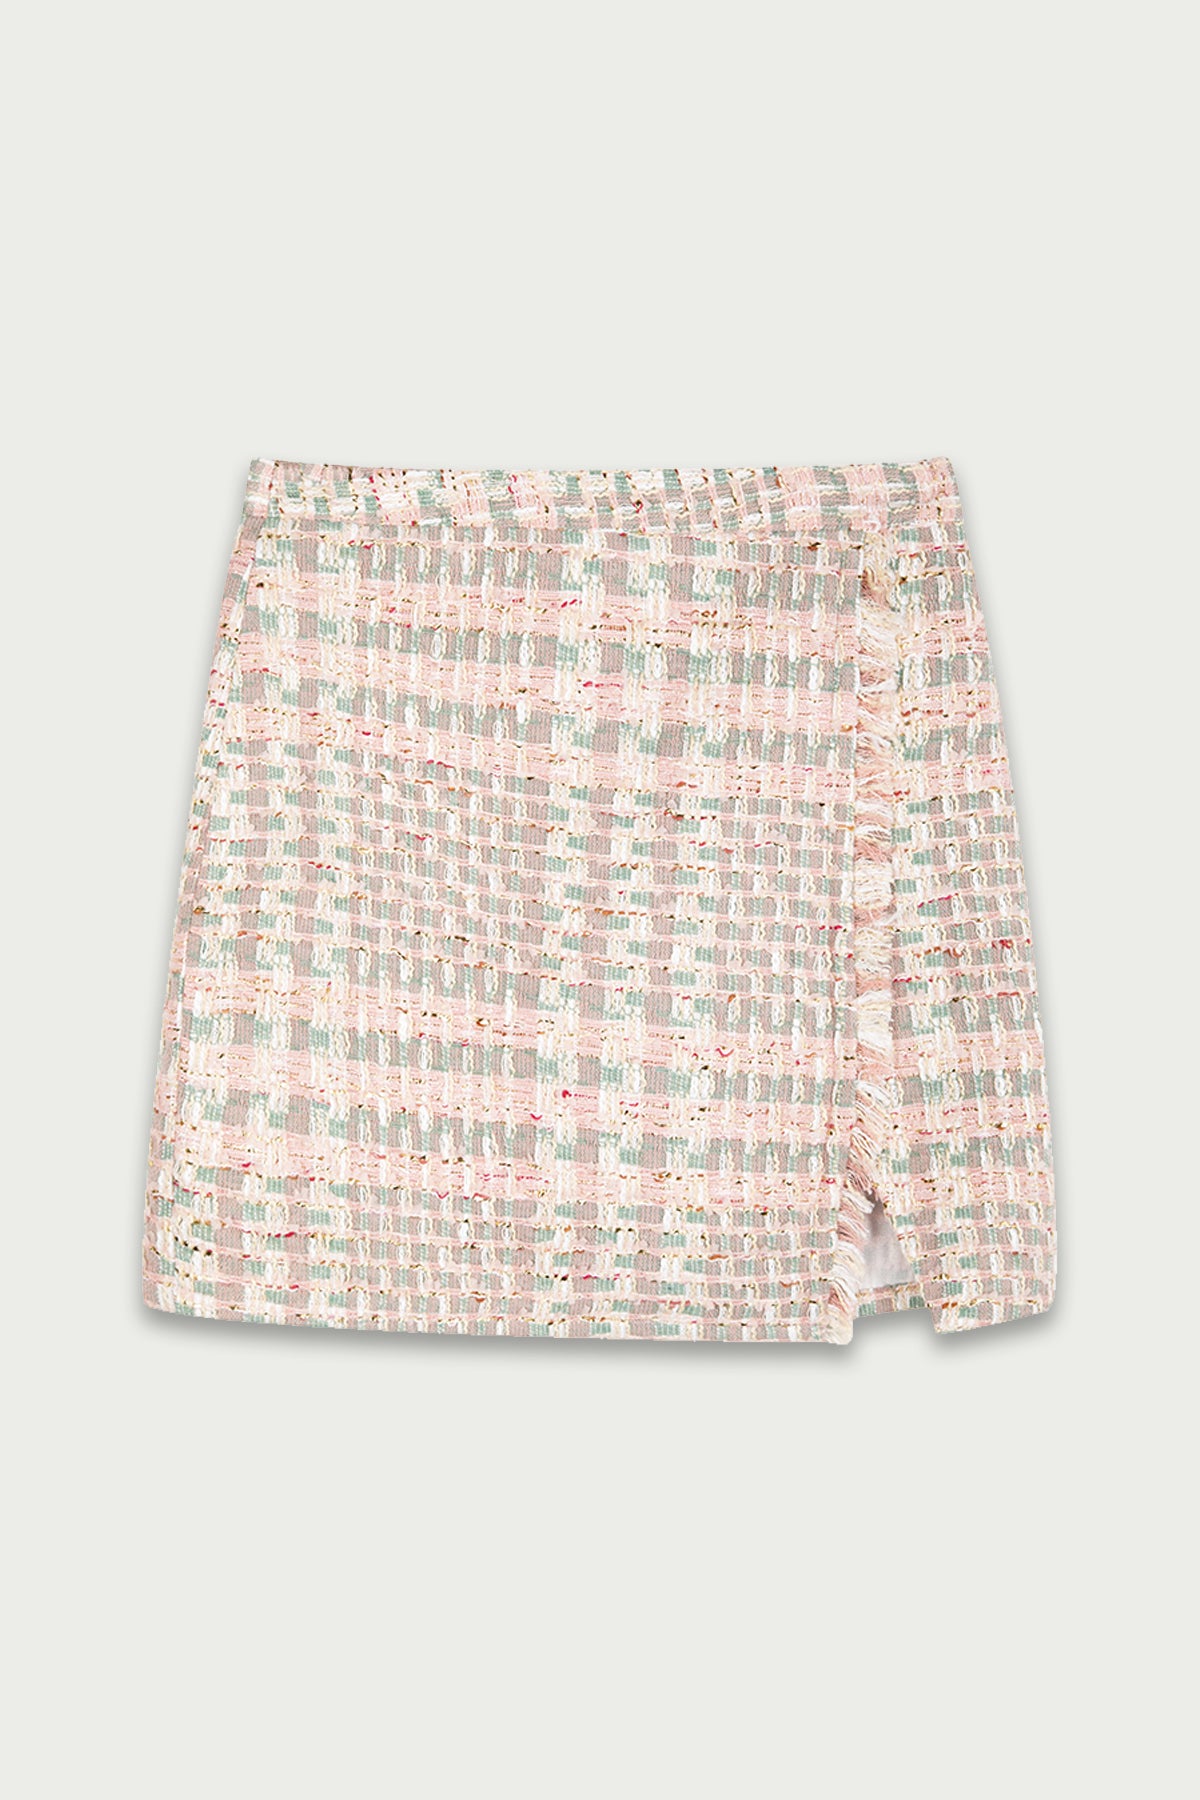 Fangyan | Blisse Cropped Texture Woven Skirt